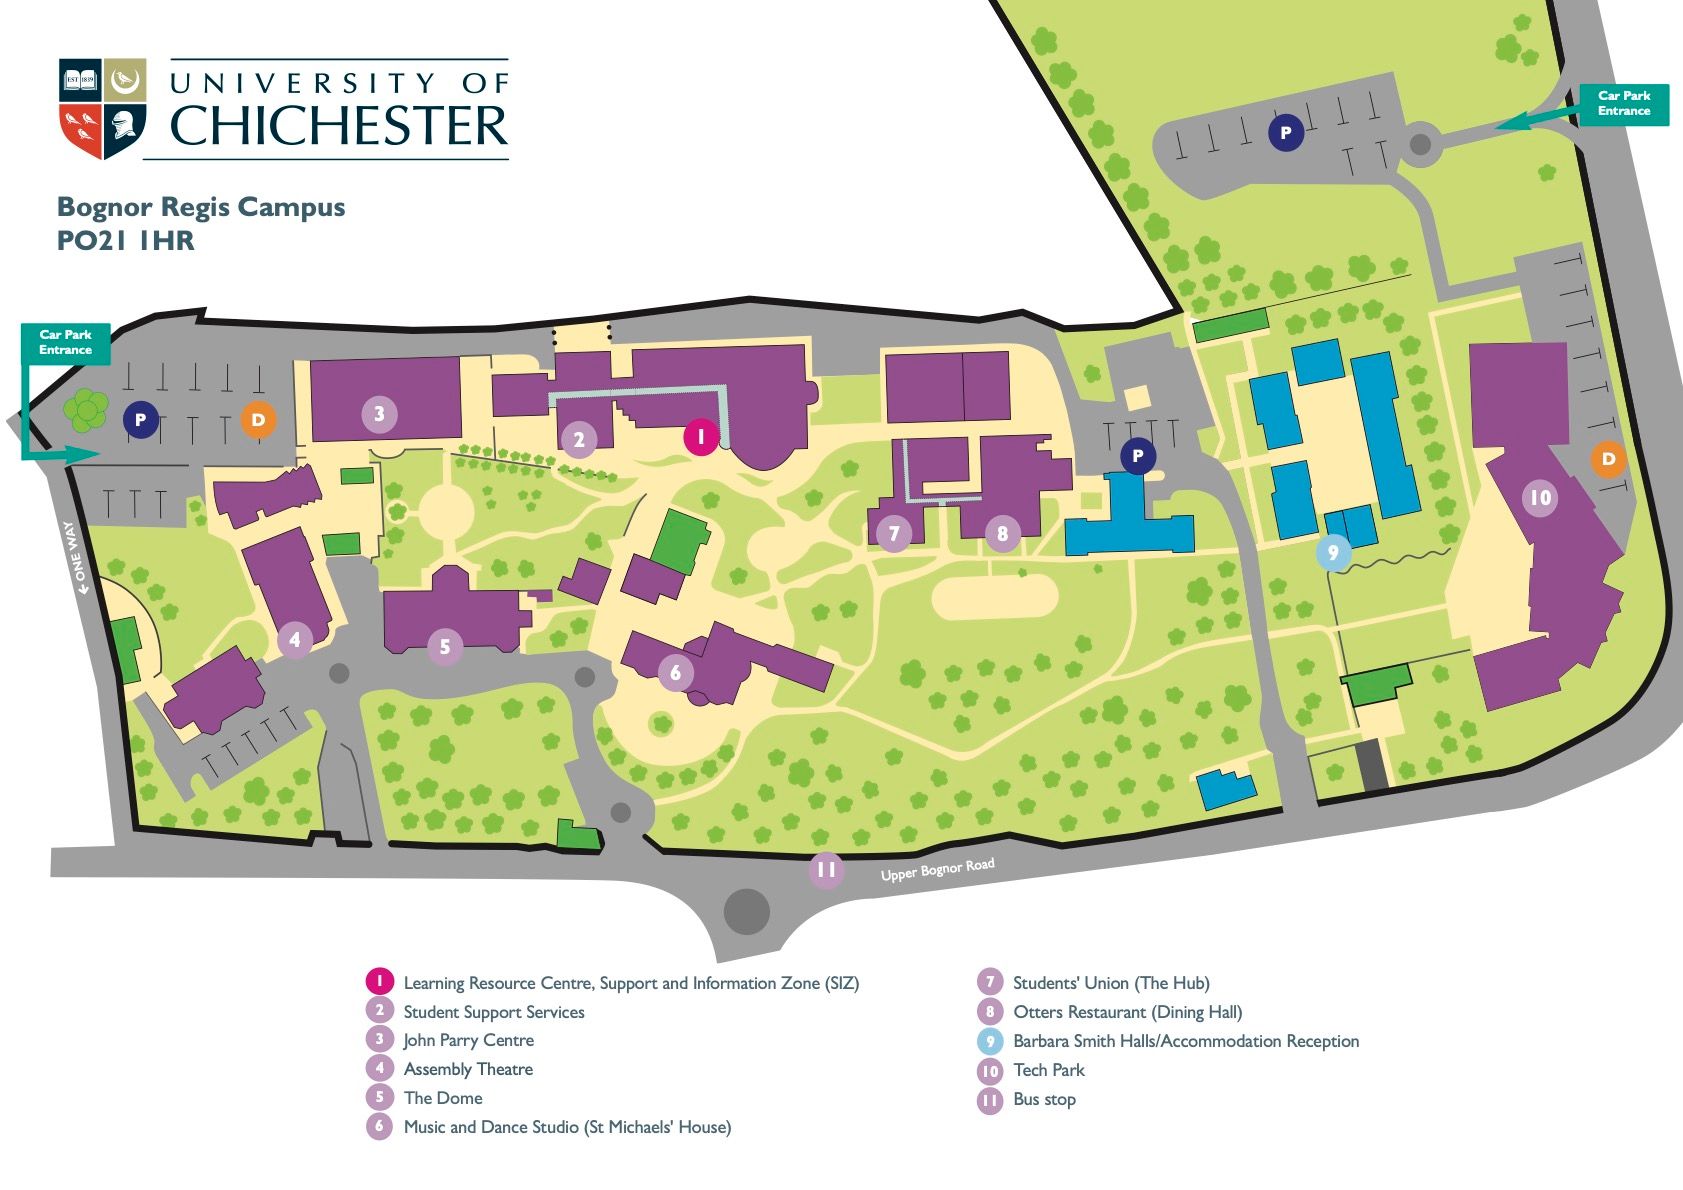 University of Chichester Bognor Regis